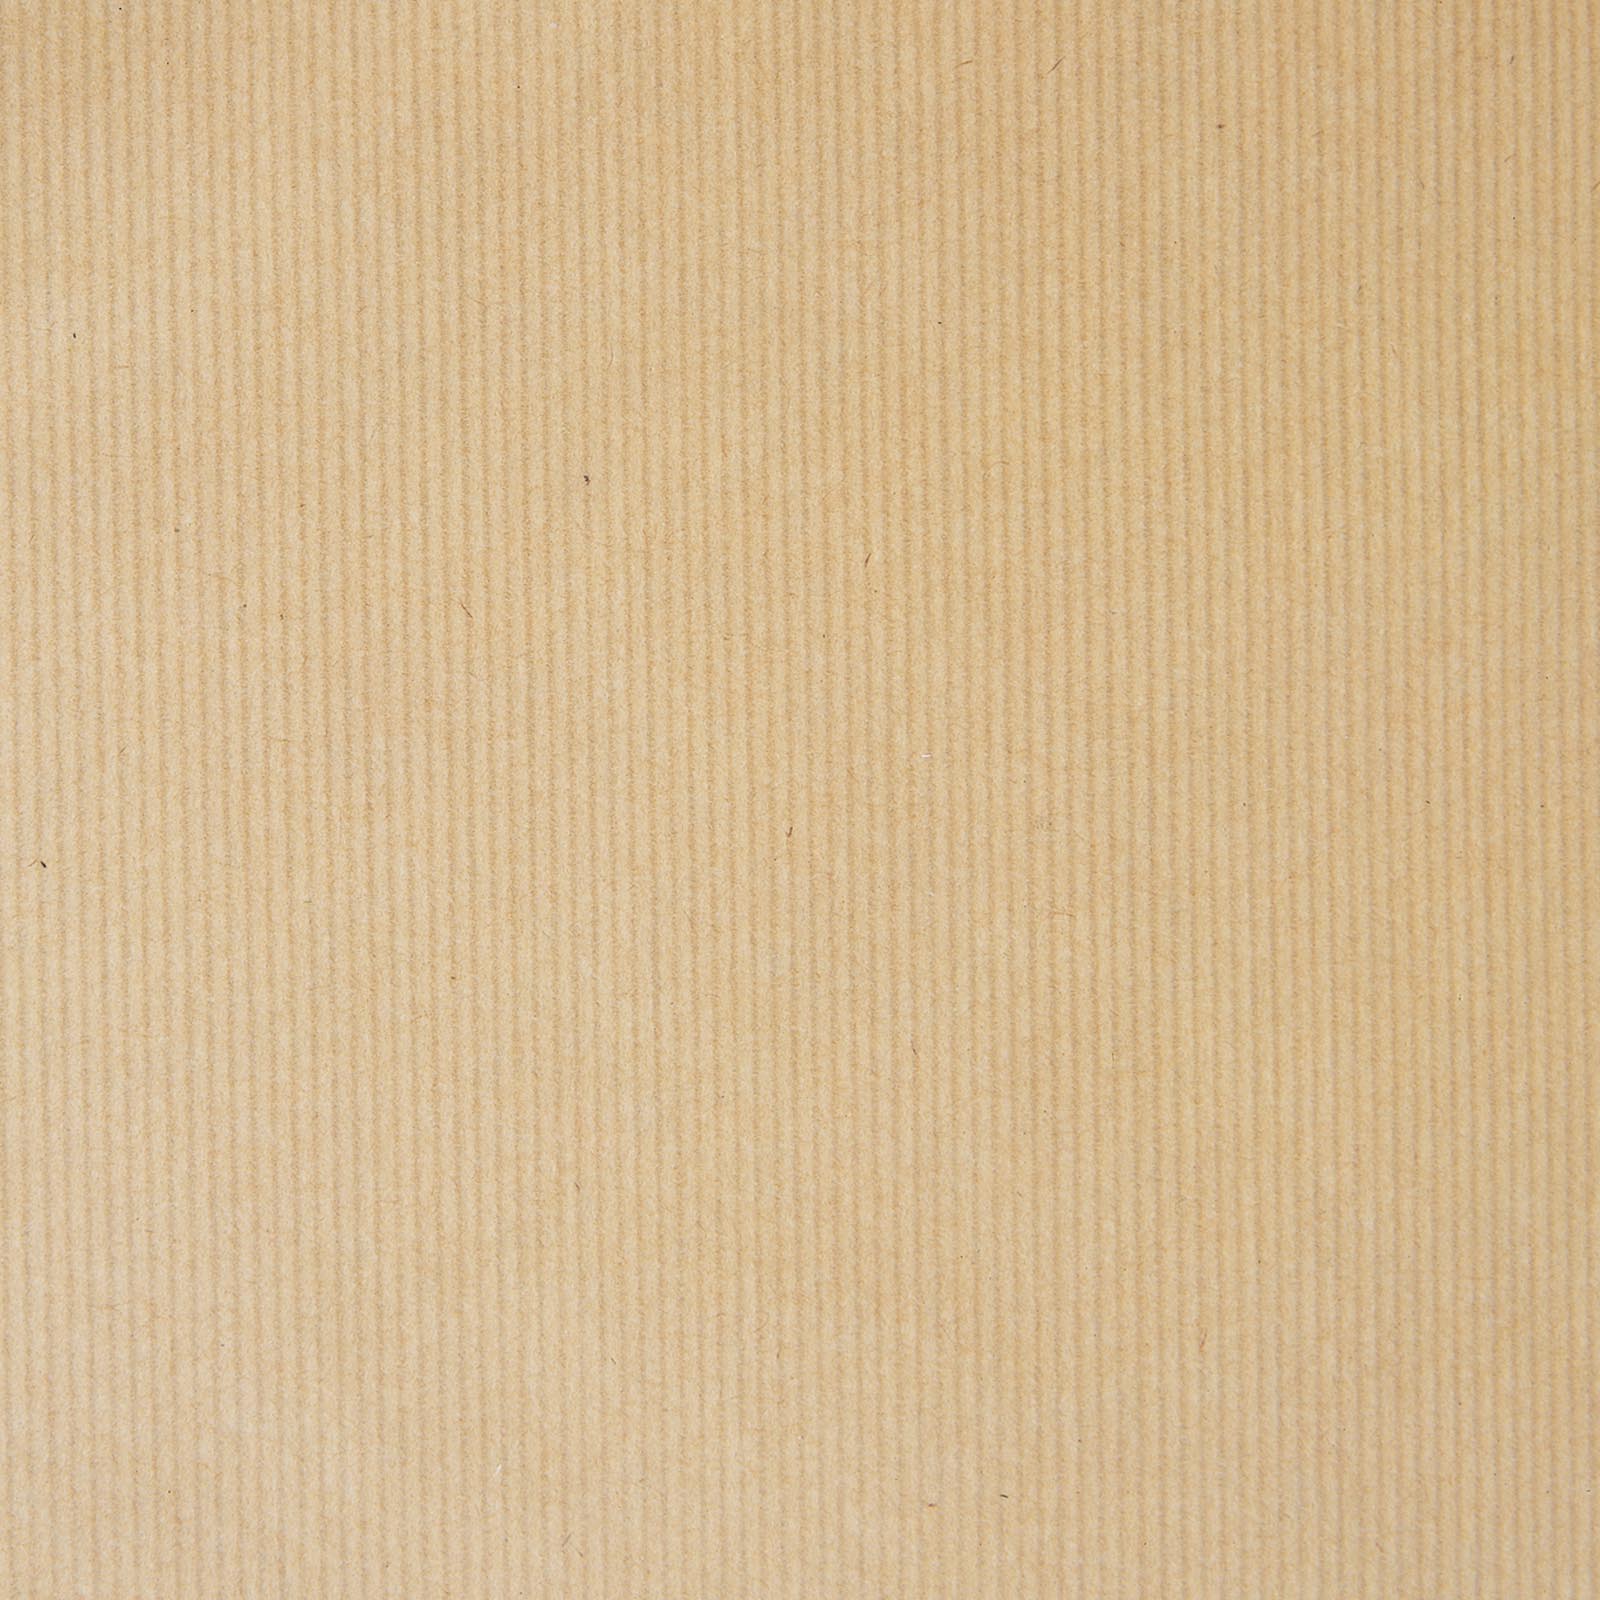 Packpapier Bogen37x50cm VE 2KG ca. 270 Bogen 40g/m², braun